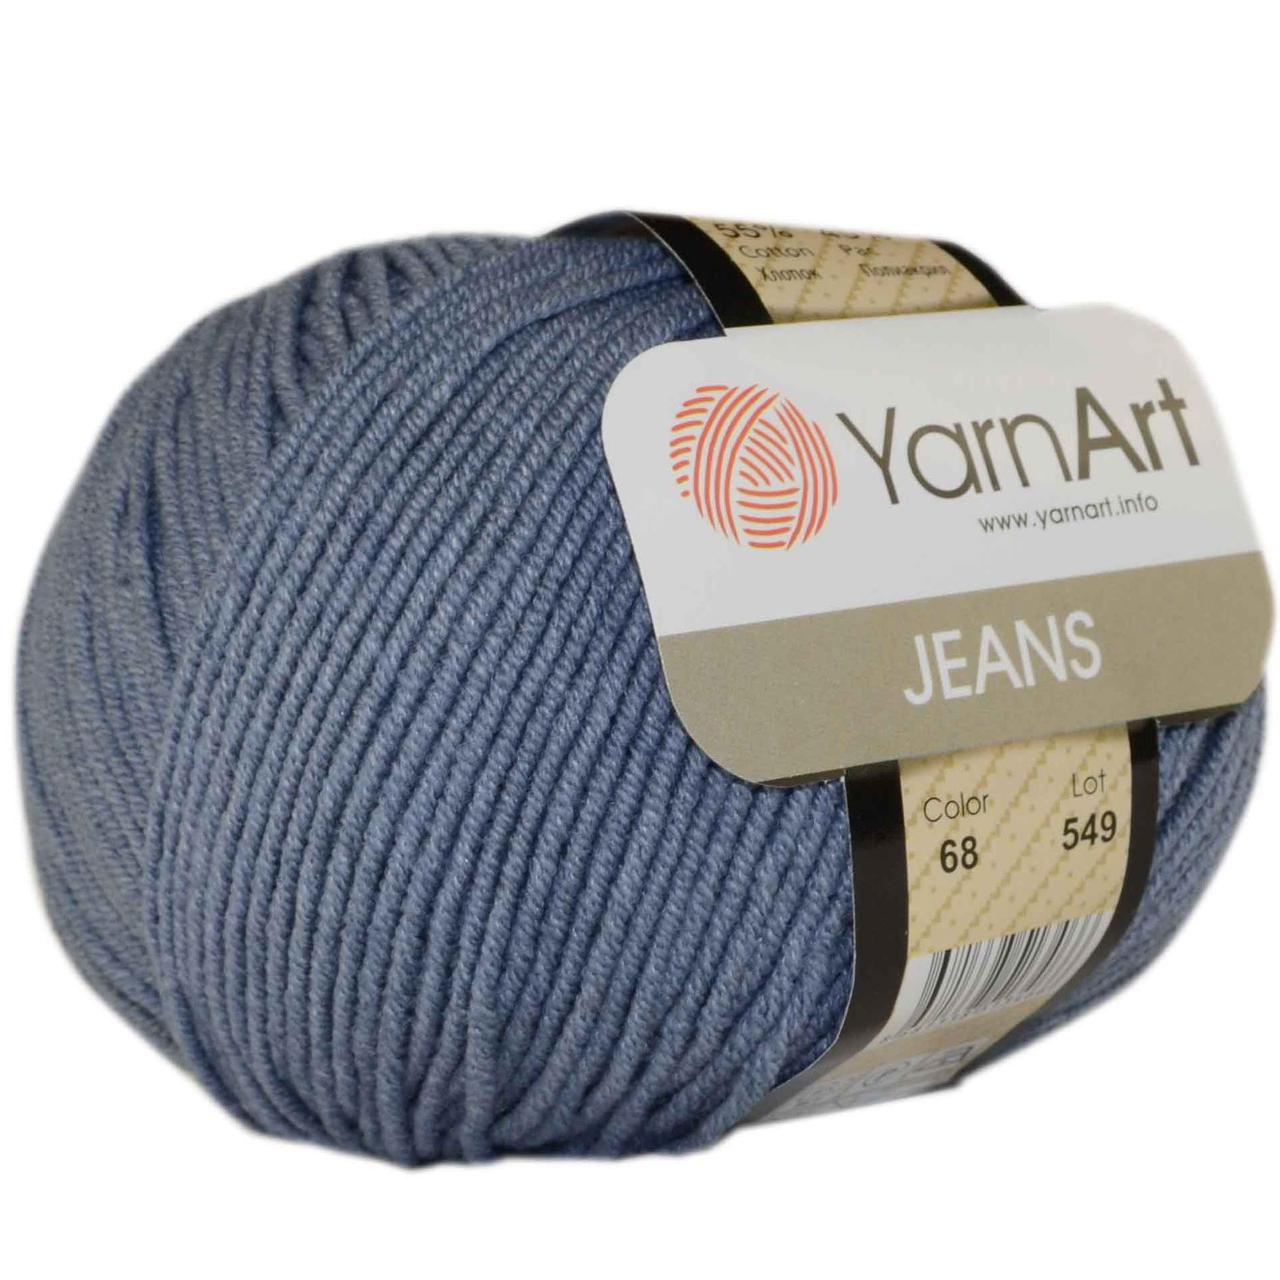 YarnArt Jeans цвет №68 джинс